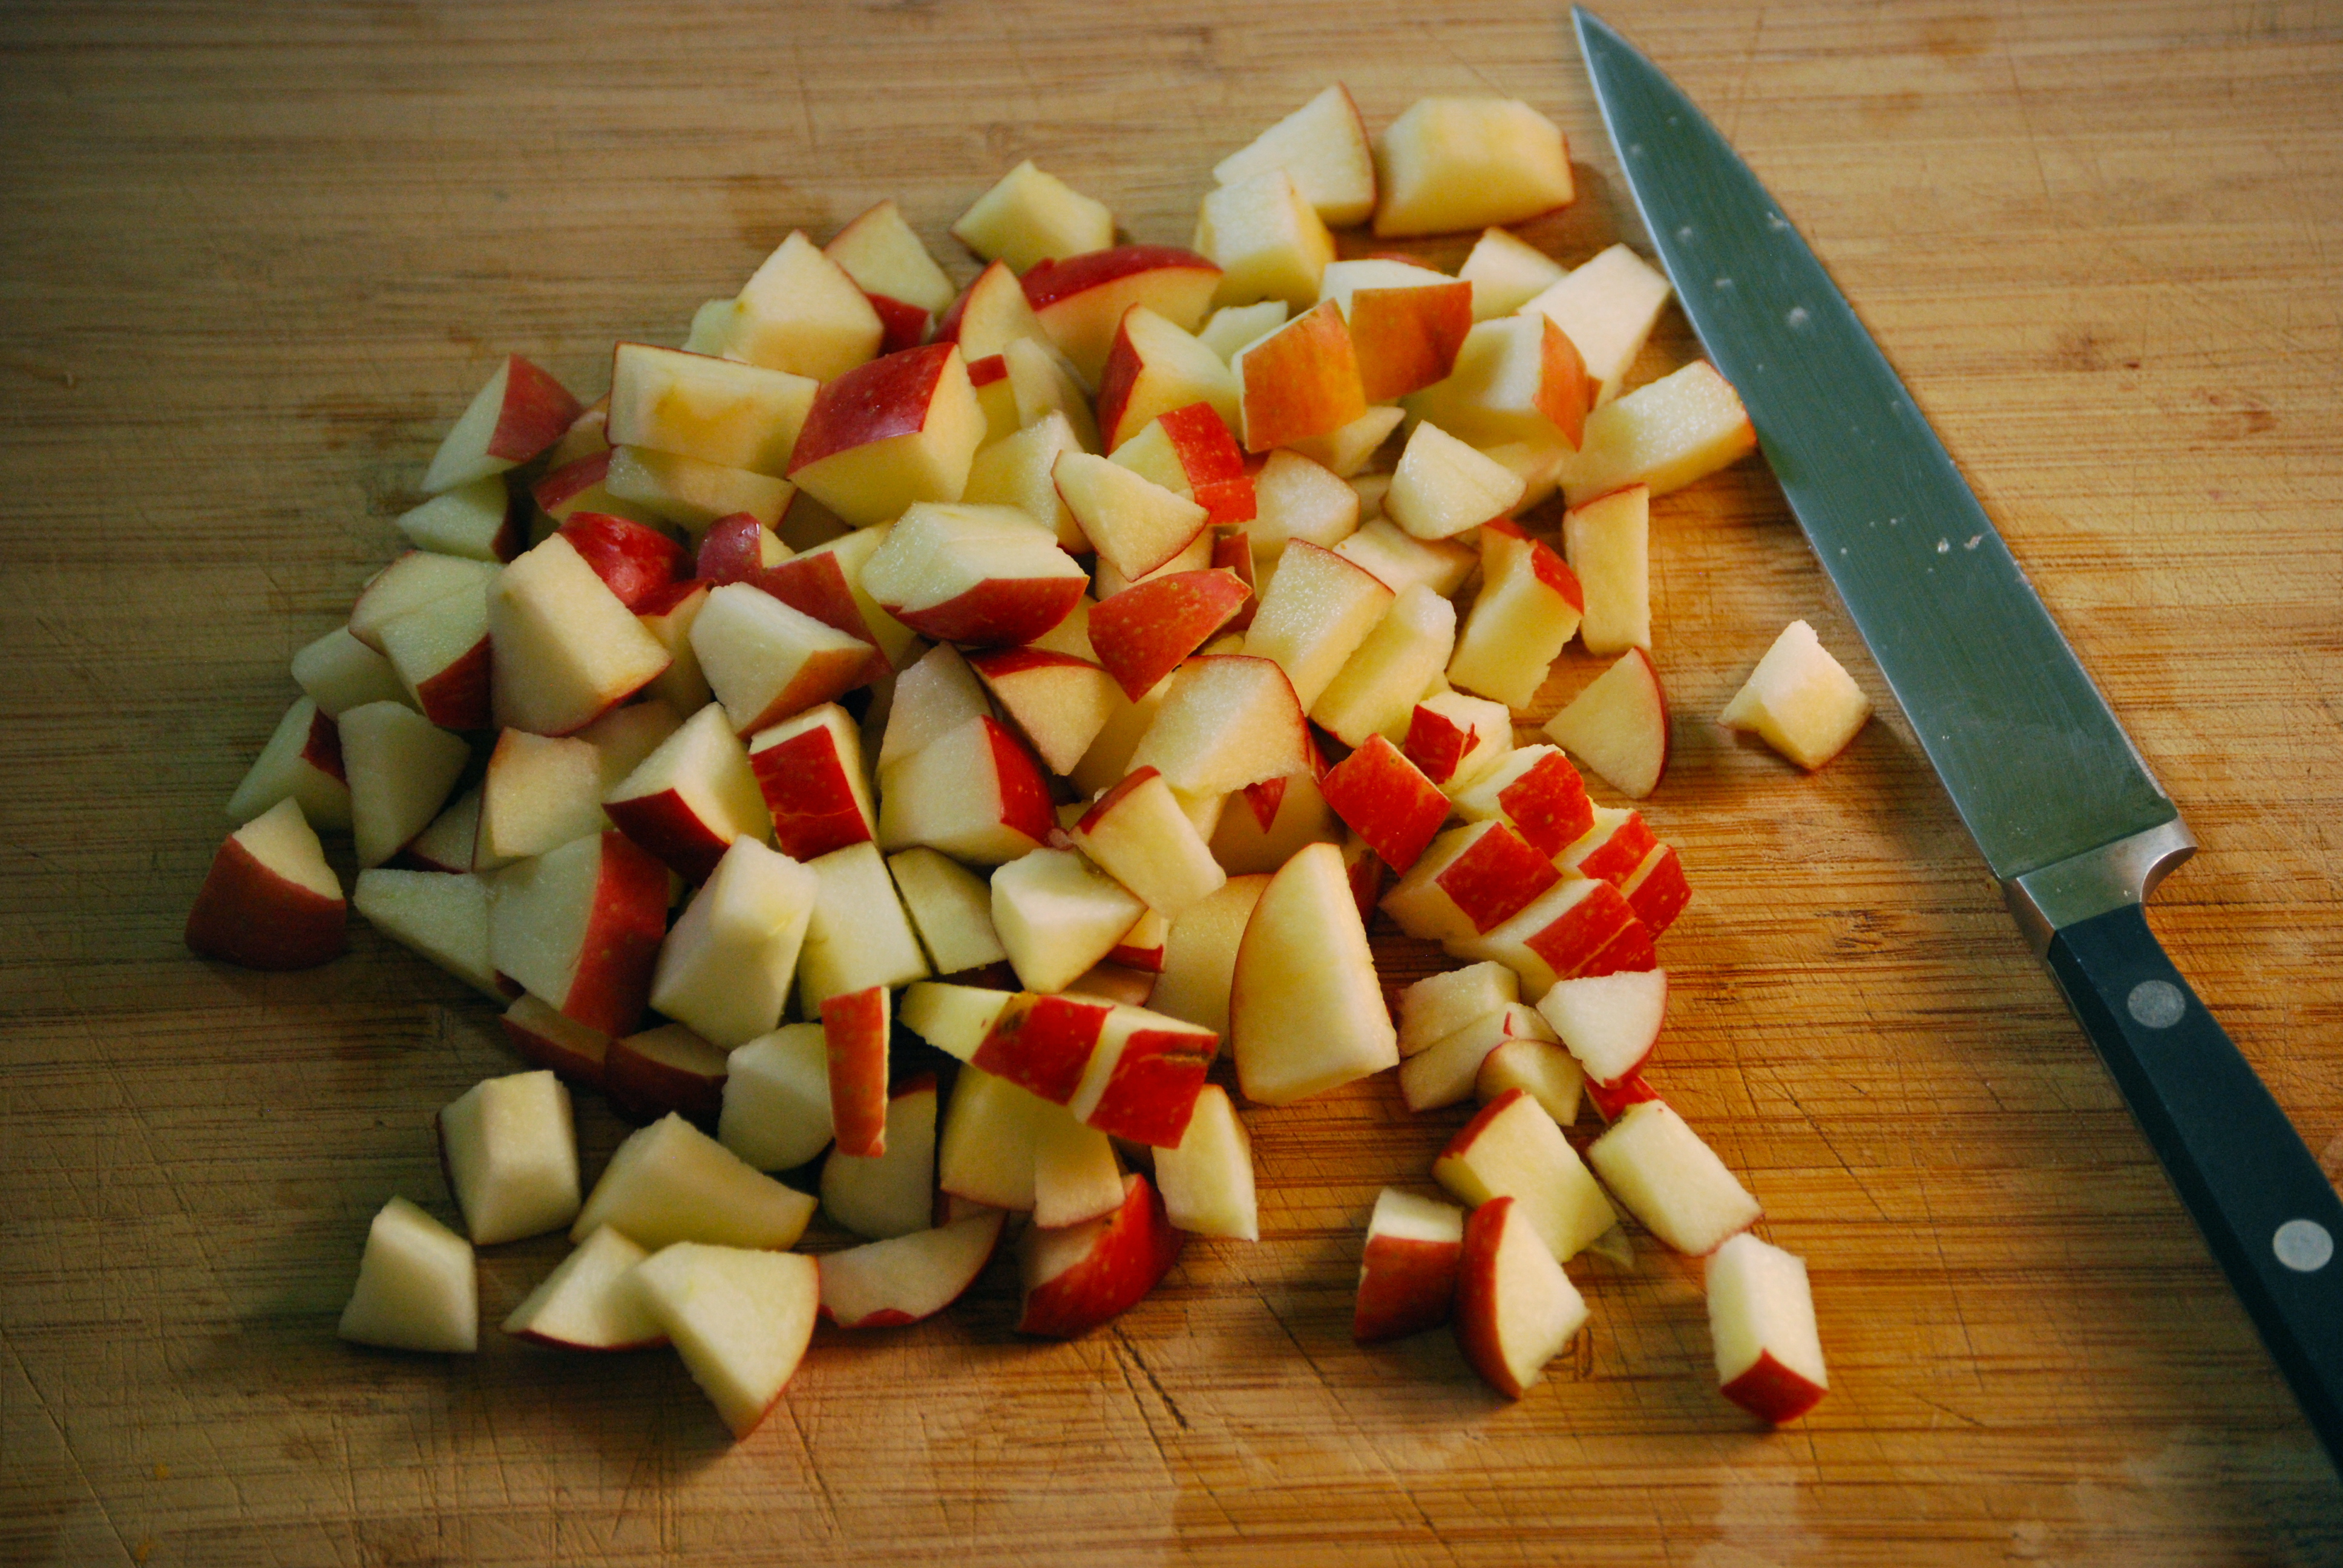 Нарезать квадратиками. Нарезанные яблоки. Яблоки нарезанные ломтиками. Яблоки нарезанные кубиками. Яблоко порезанное кубиками.